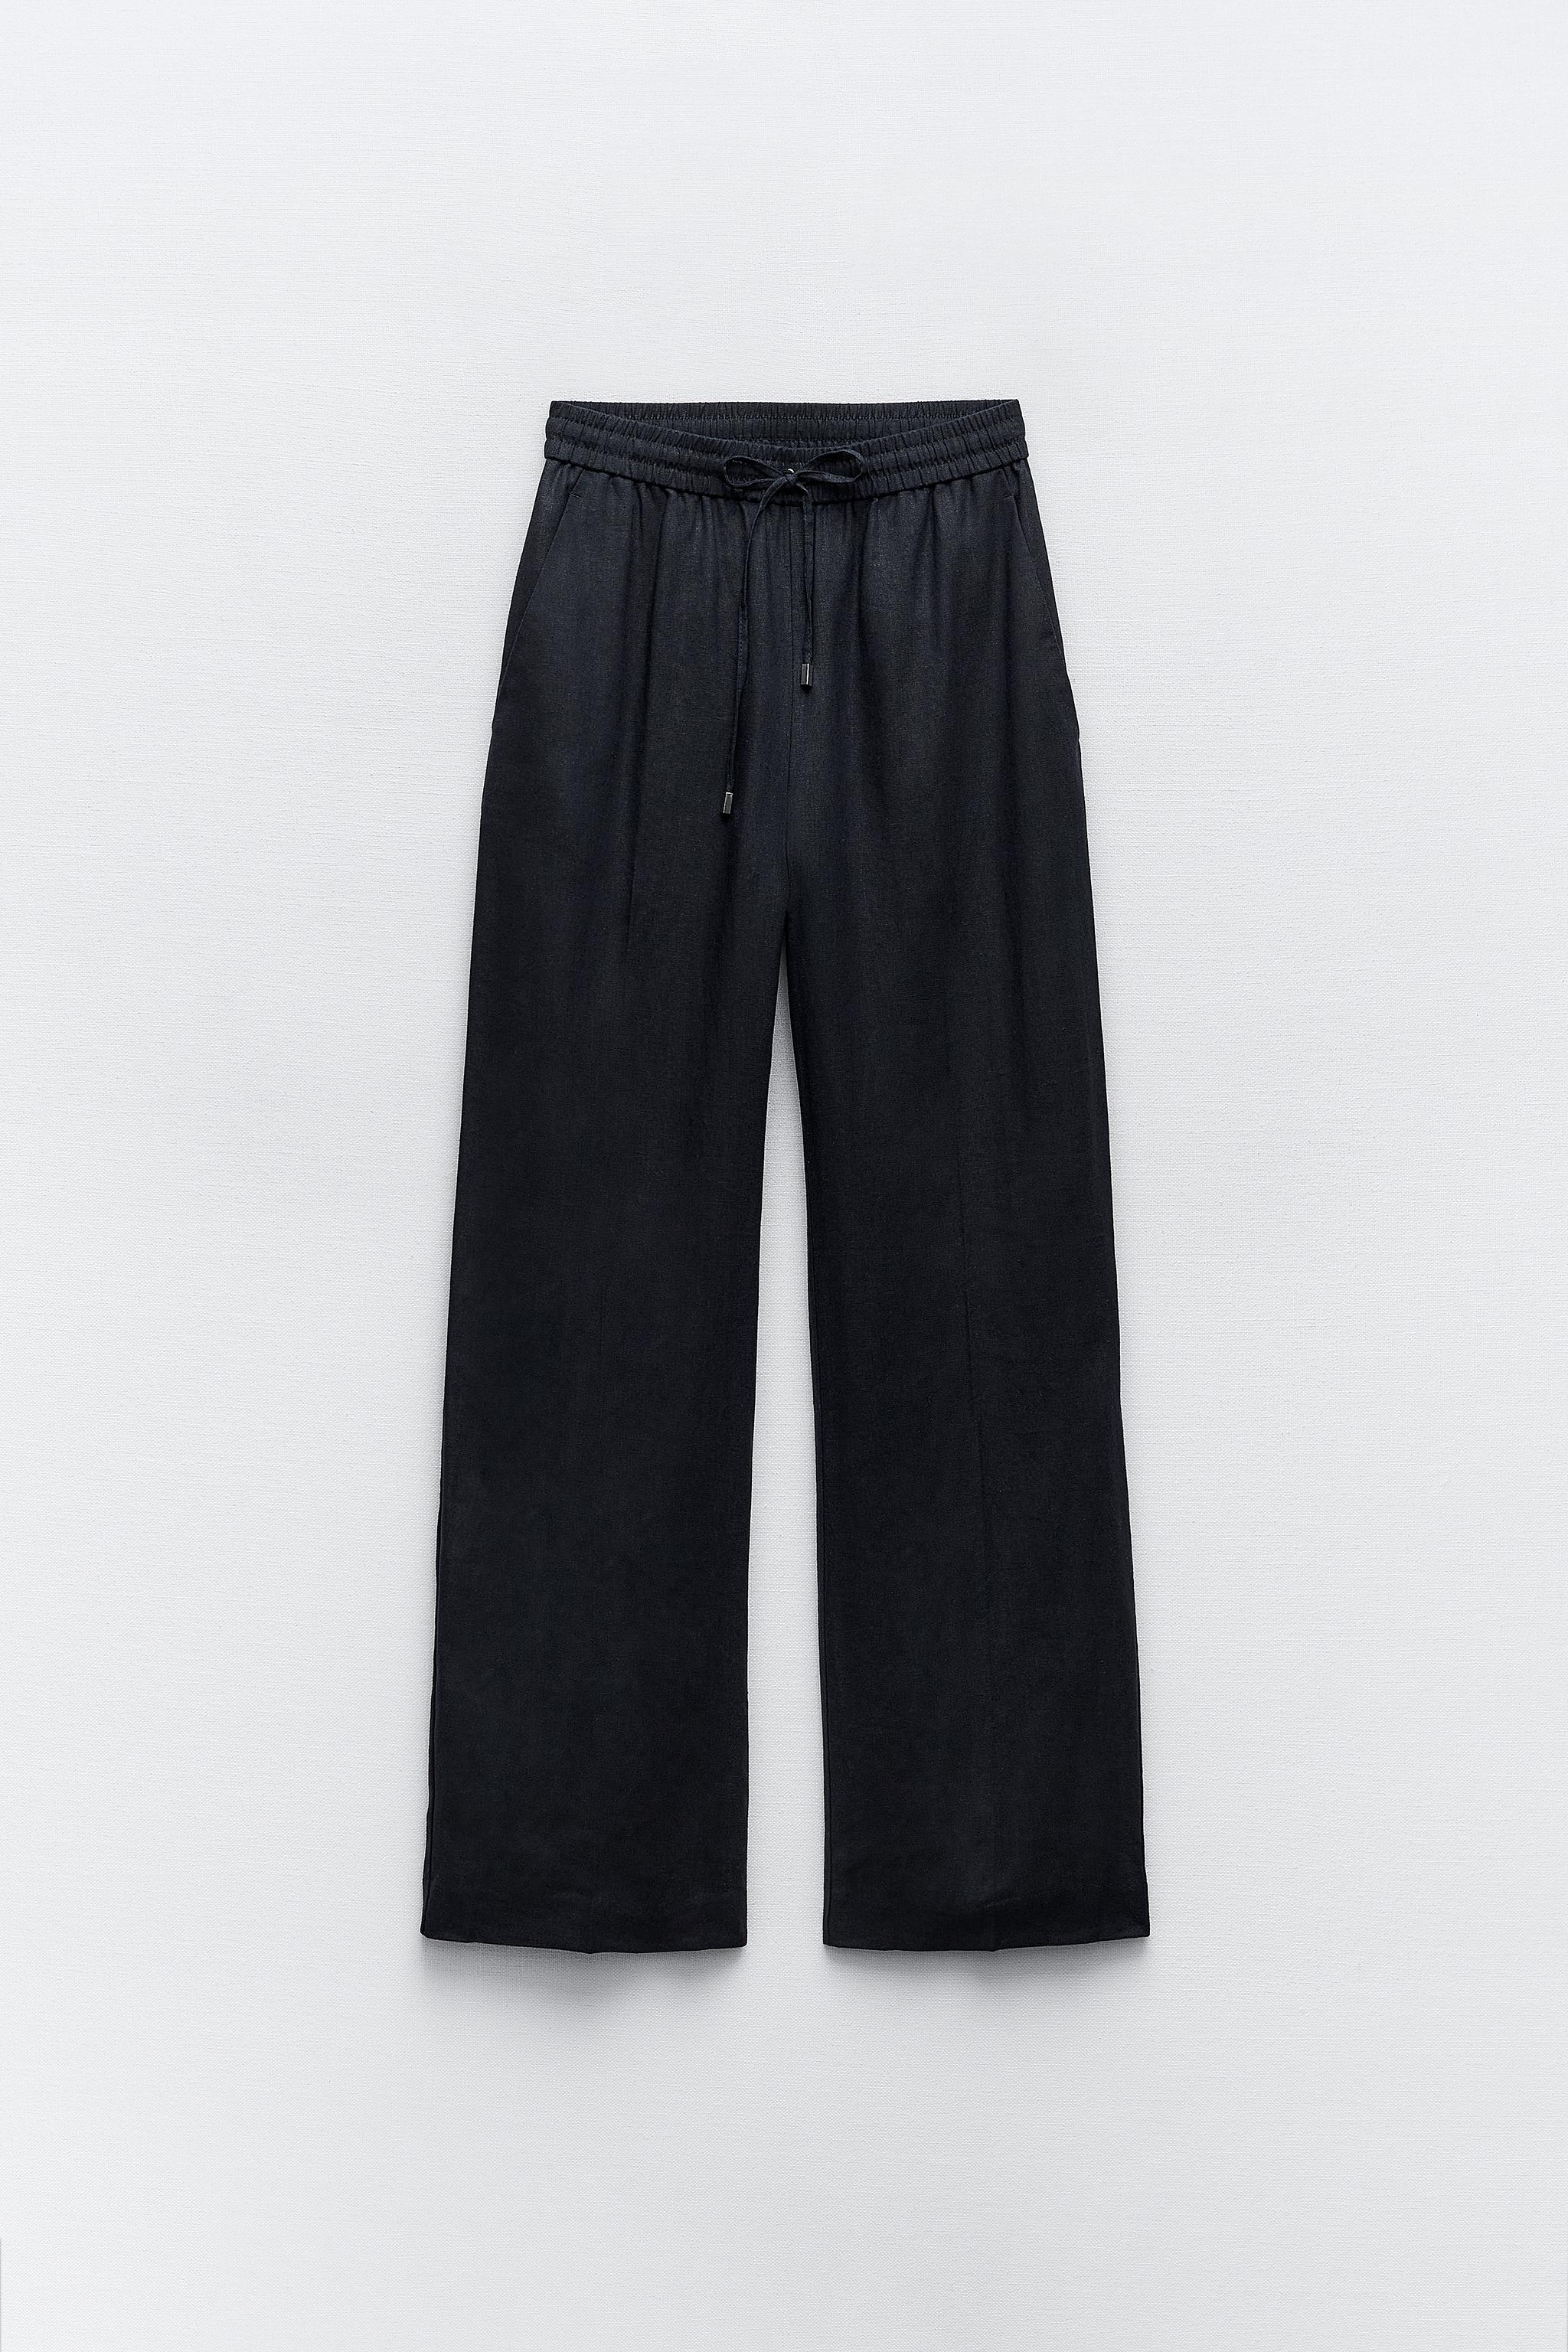 Summer Linen Pants. Classic Linen Pants. Women Trousers. Terracotta Pants.  Women Linen Trousers. Woman Pants. 100% Pure Linen italy 